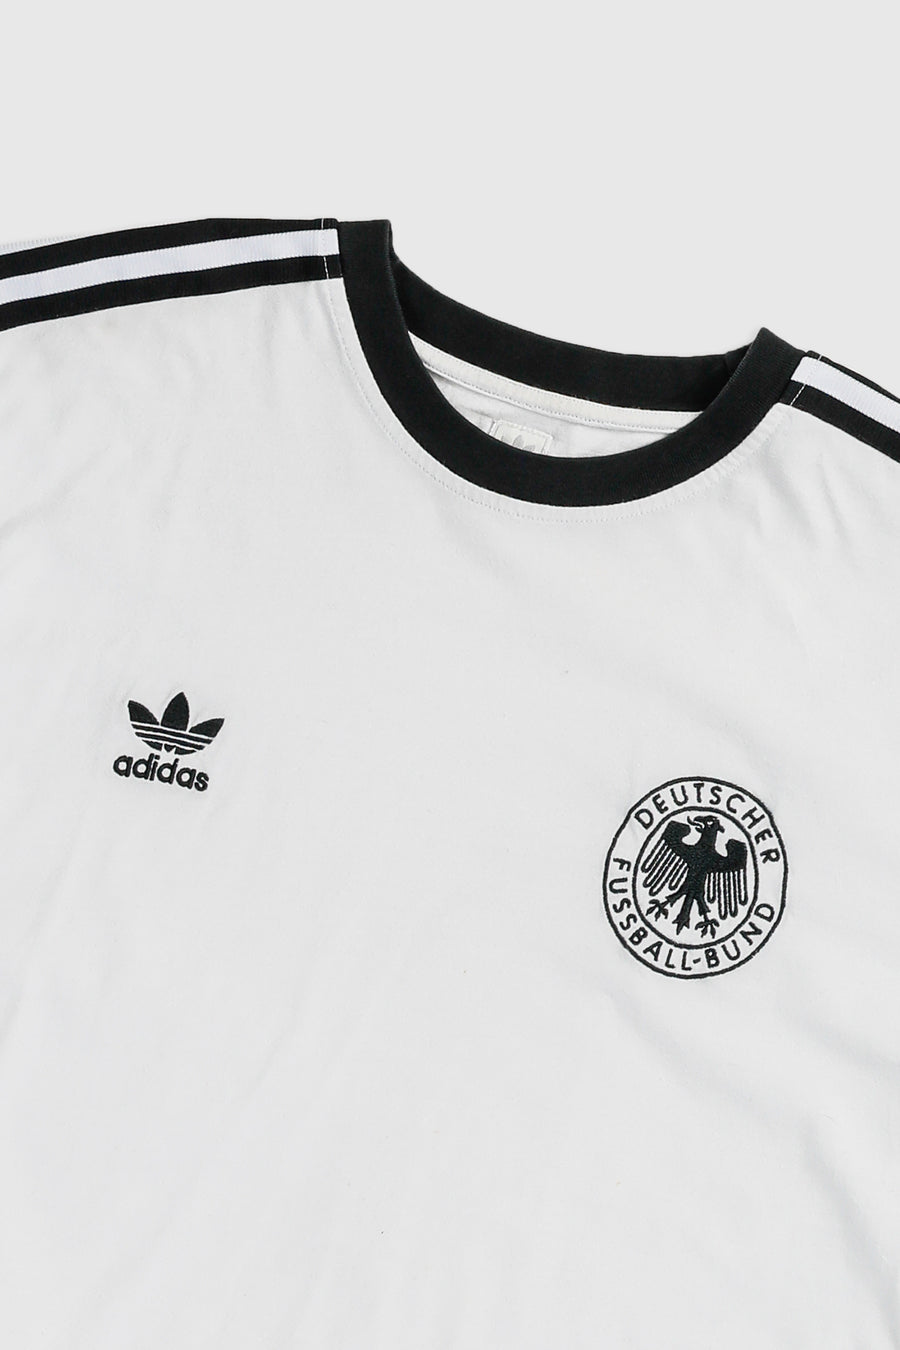 Vintage Adidas Germany Soccer Tee - L